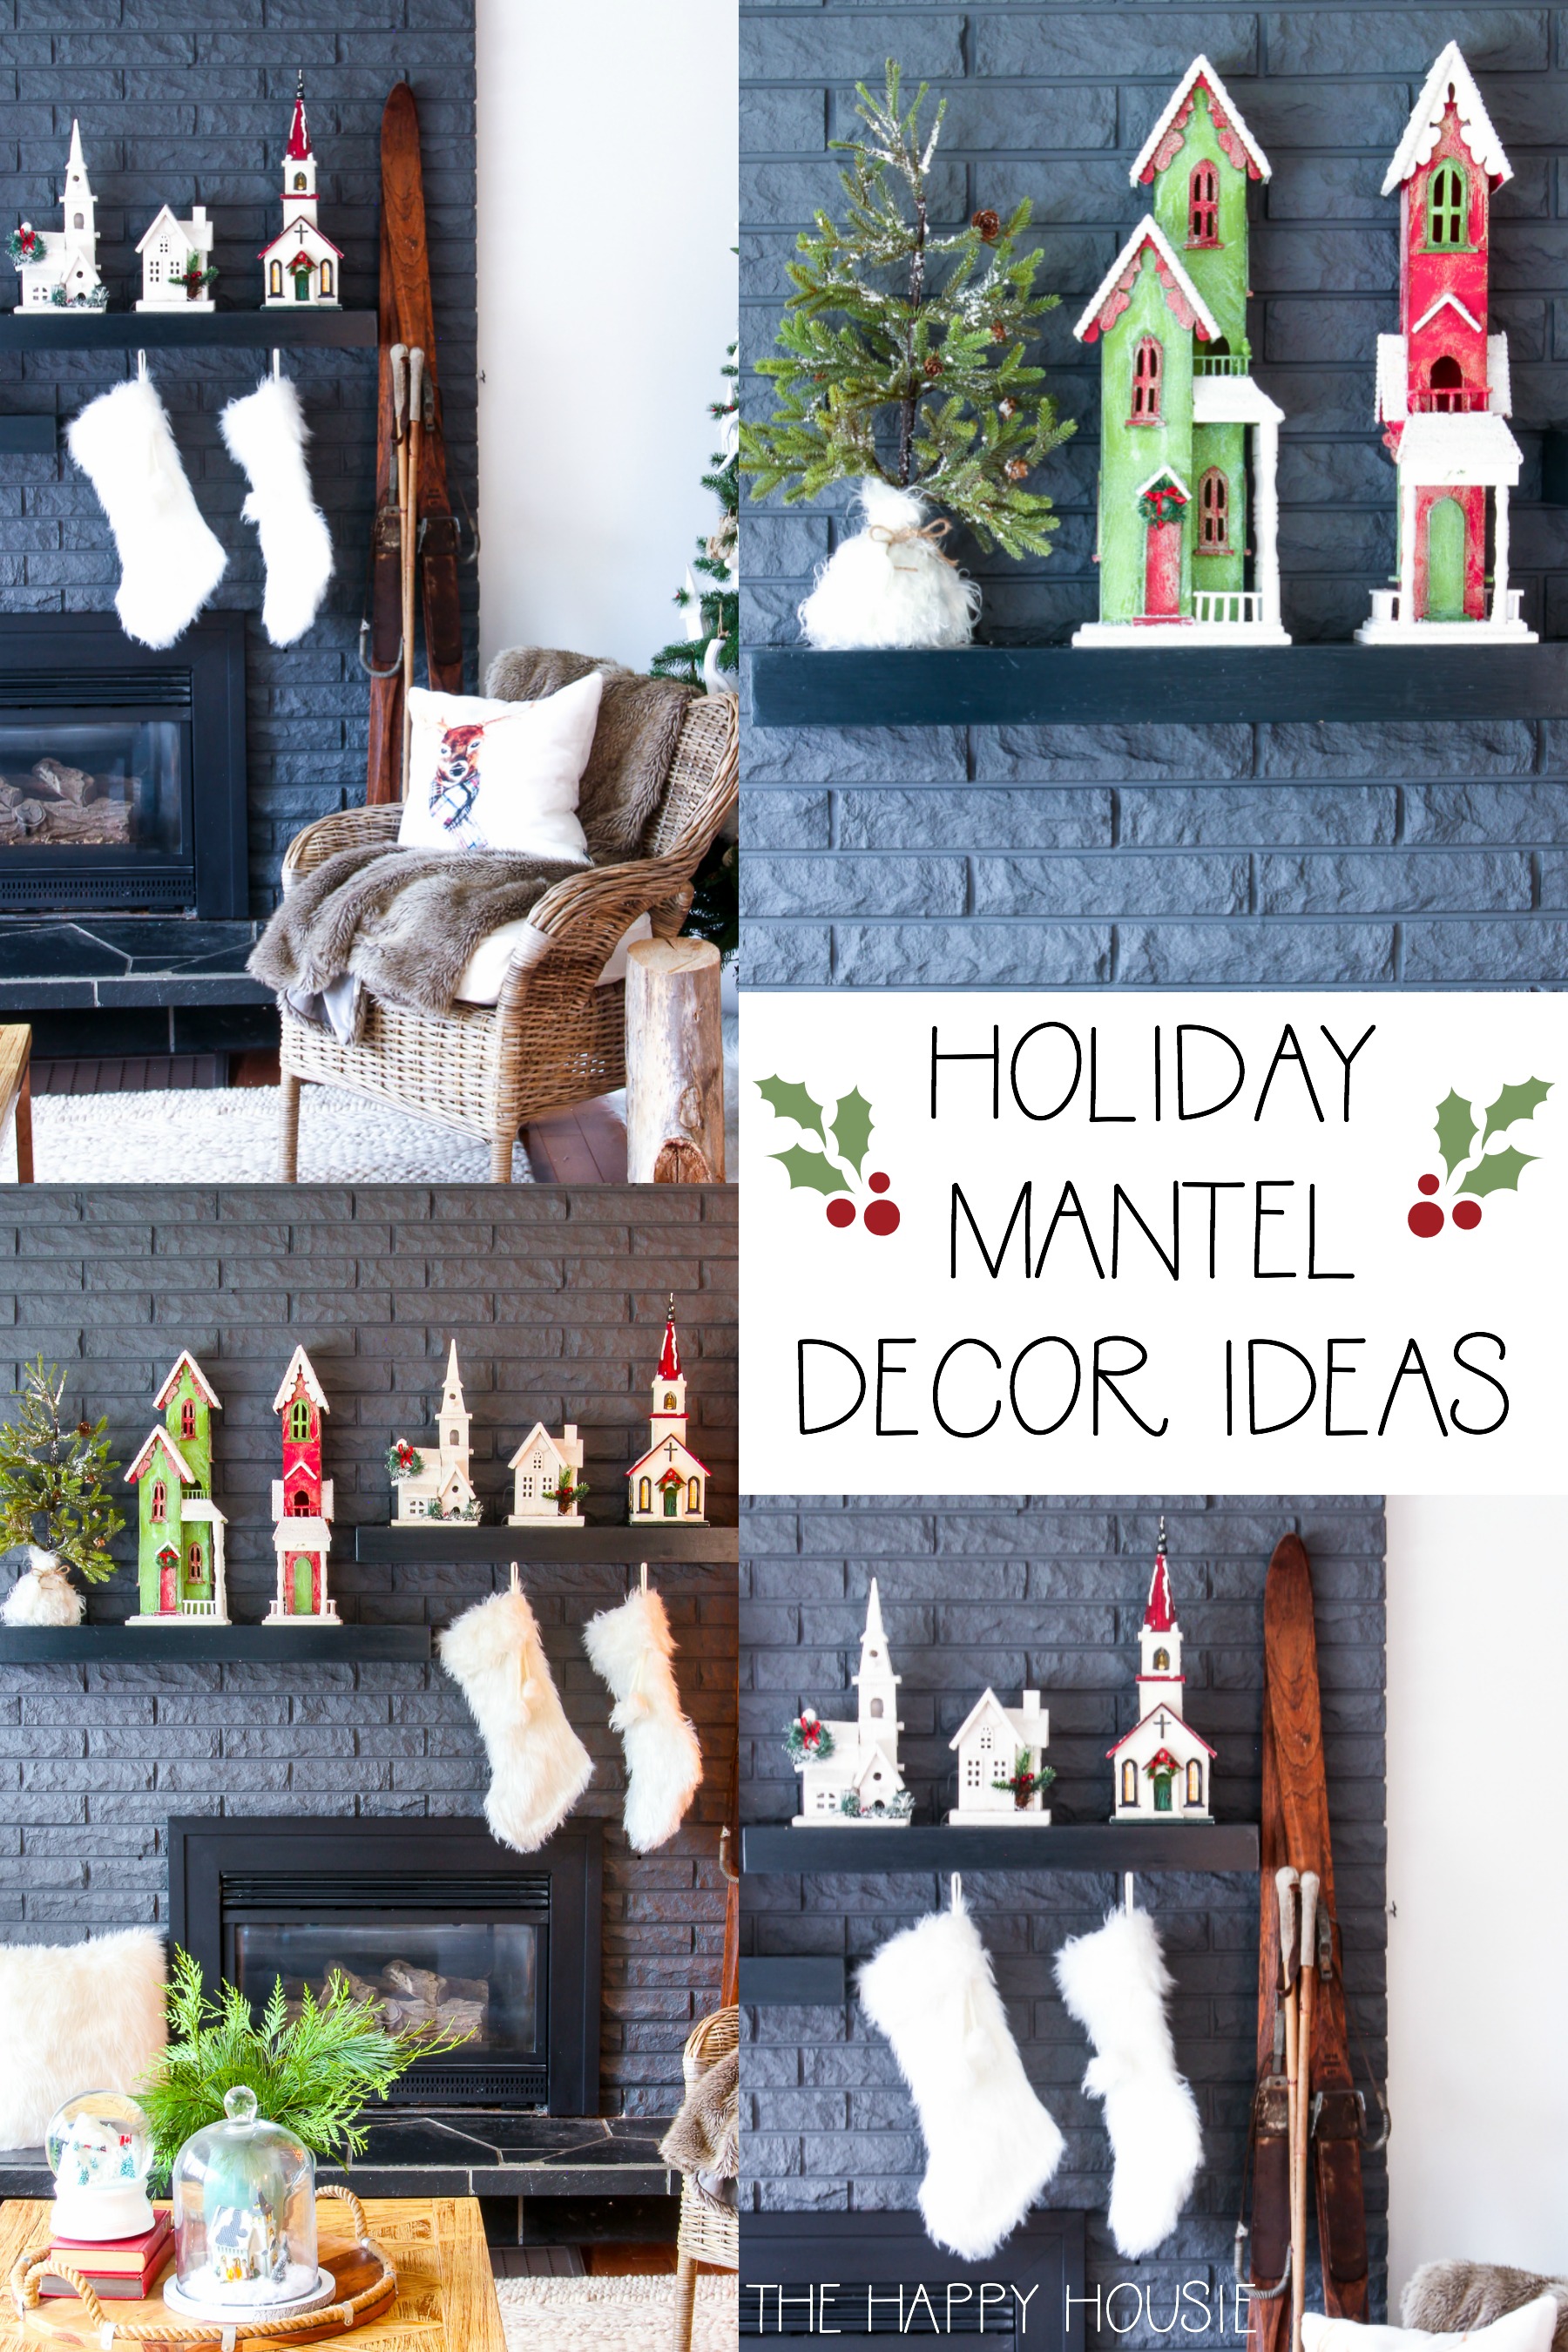 Holiday Mantel Decor Ideas poster.